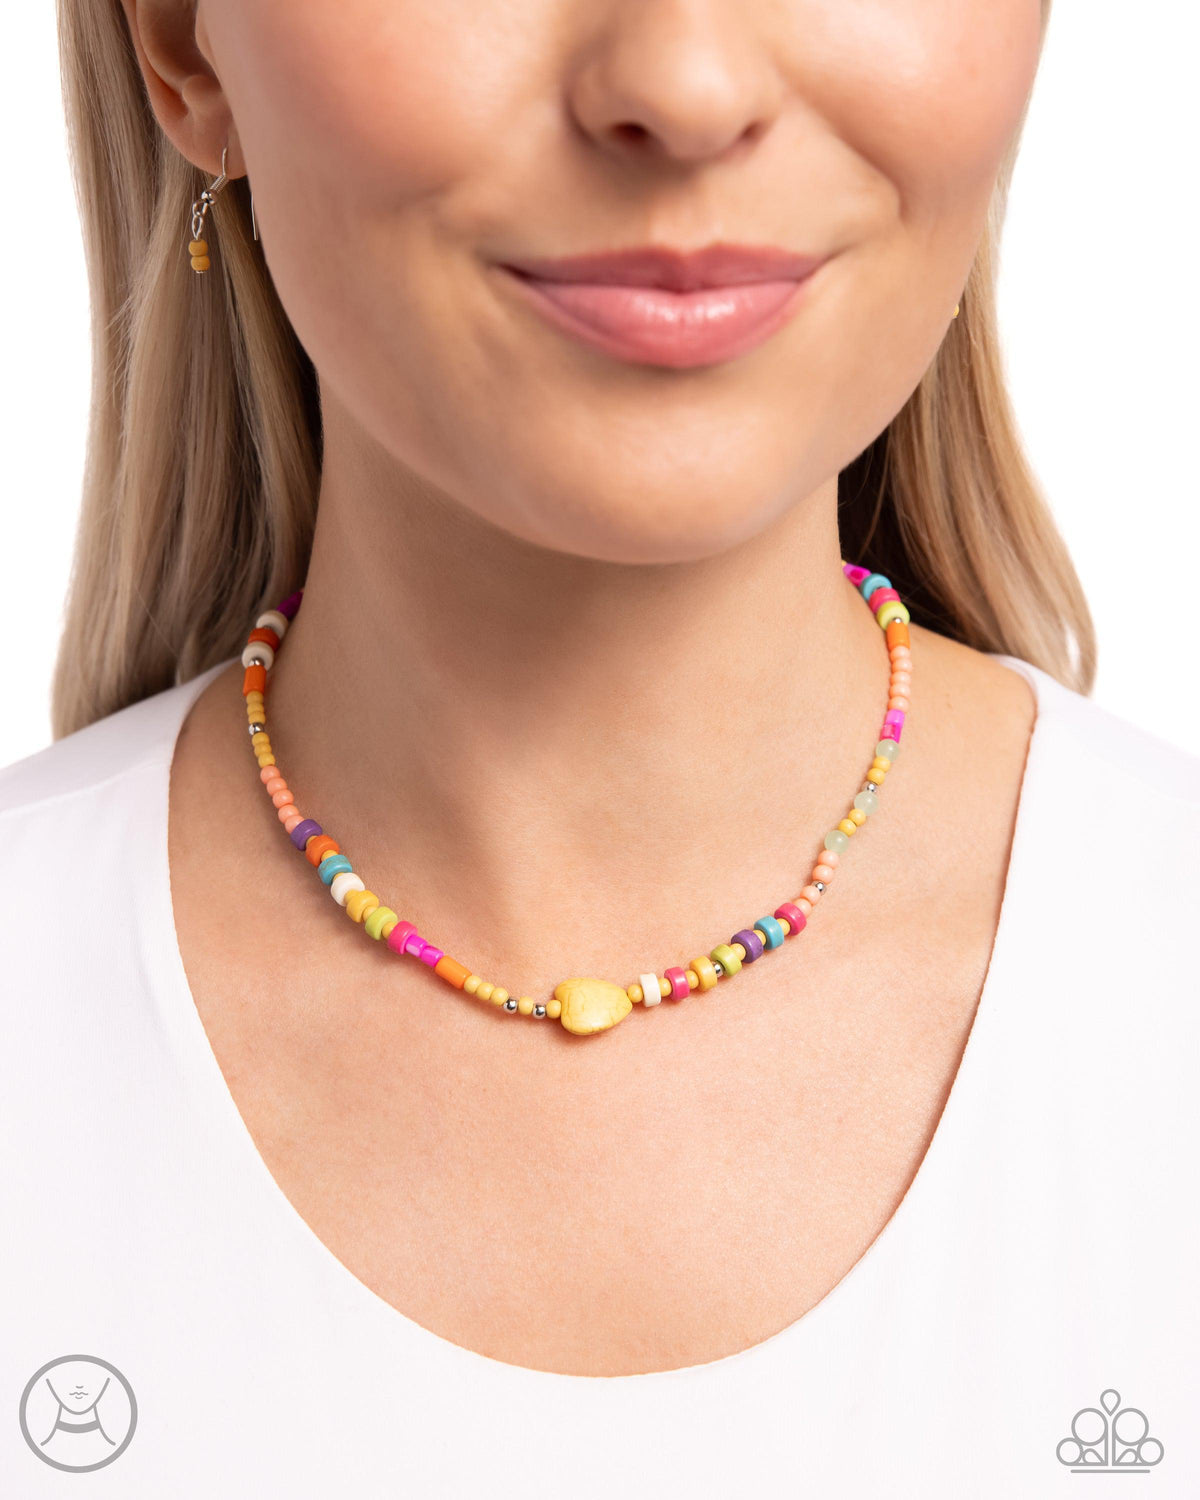 Y2K Energy Yellow Stone Choker Neckace - Paparazzi Accessories-on model - CarasShop.com - $5 Jewelry by Cara Jewels